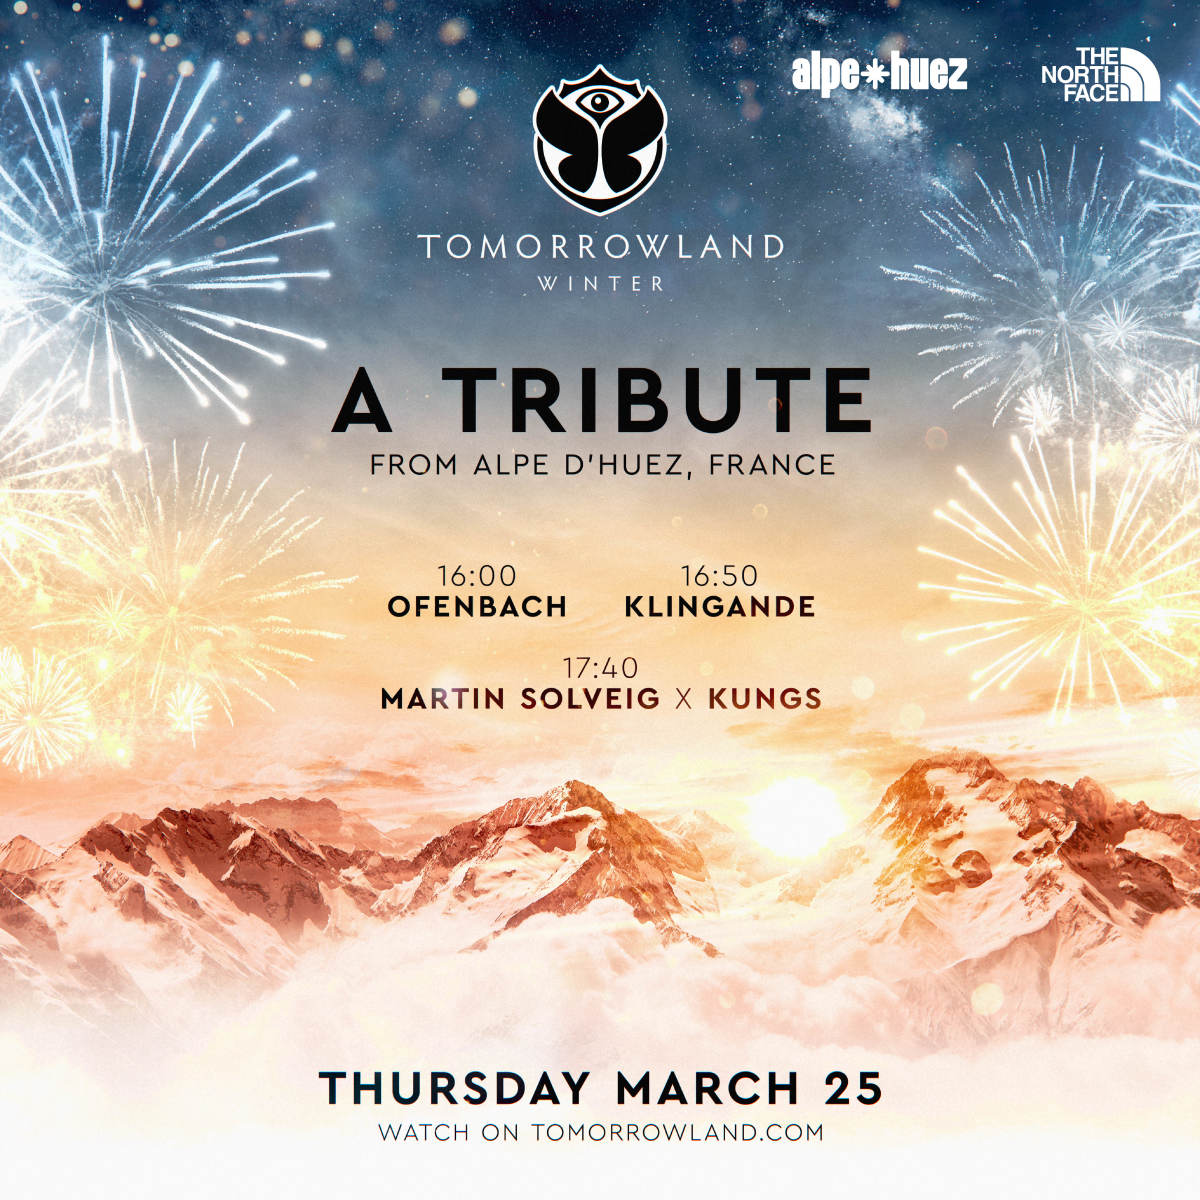 Tribute+to+Tomorrowland+Winter